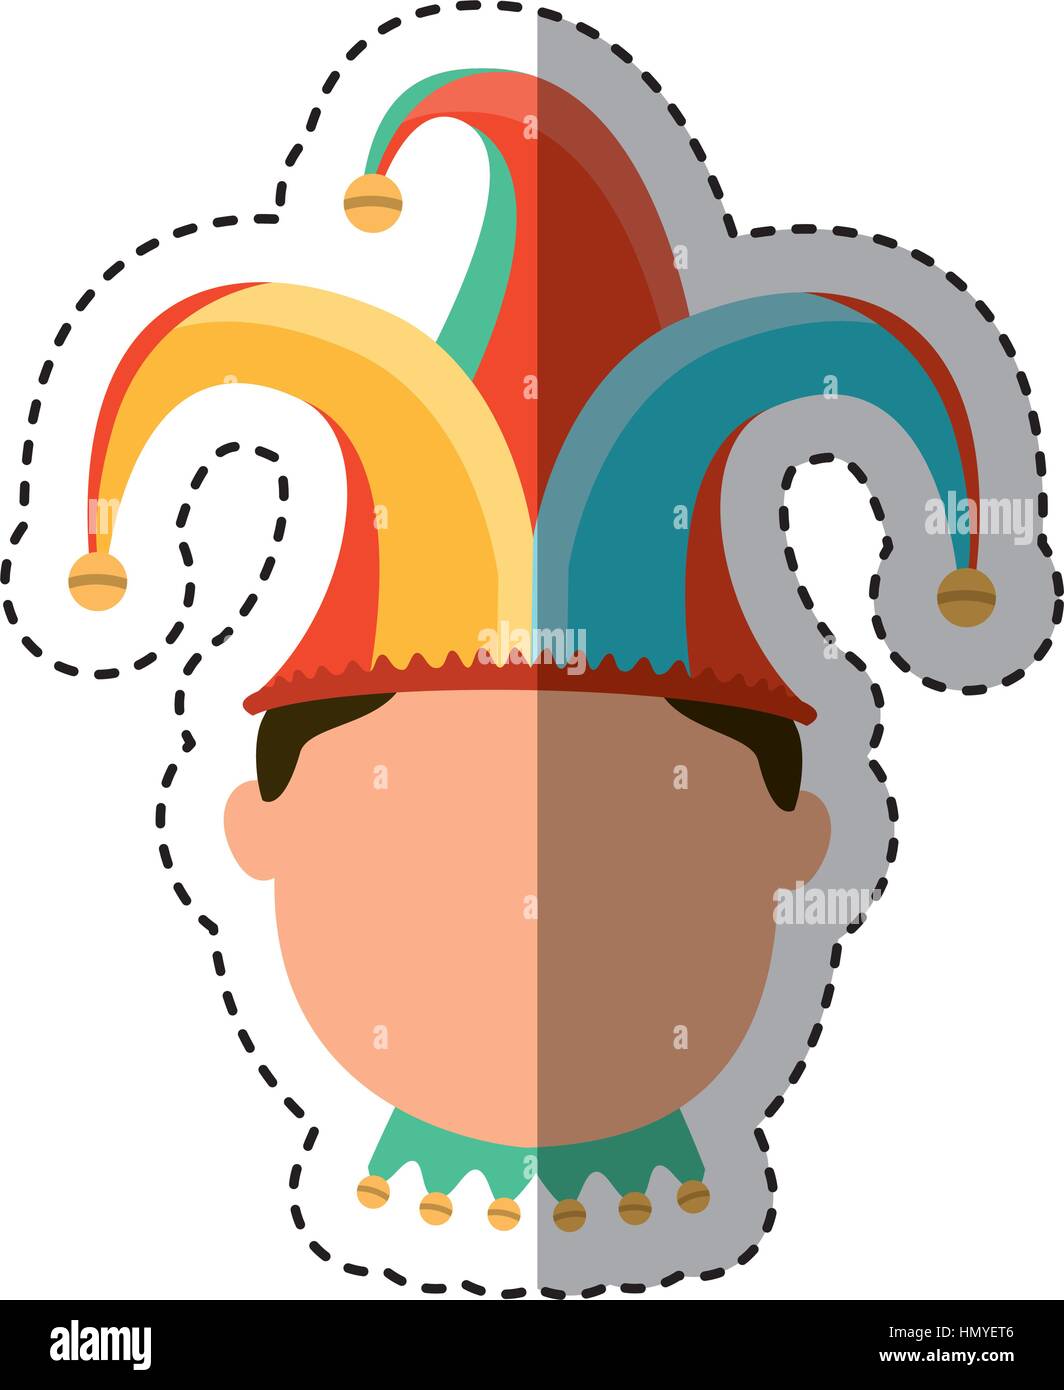 funny harlequin avatar character vector illustration design Stock Vector